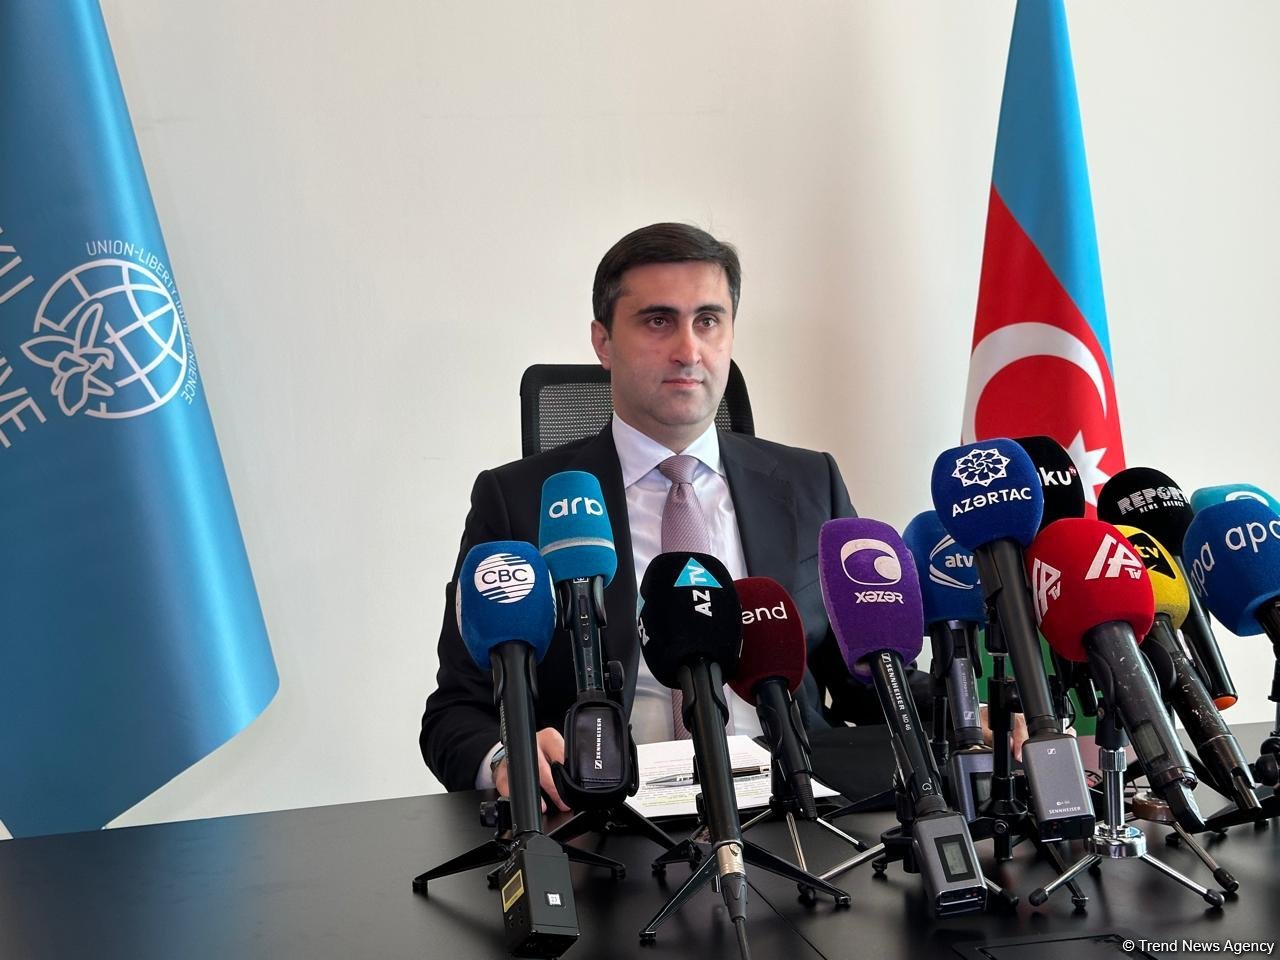 Шаги Азербайджана основаны на международном праве  - Аббас Аббасов